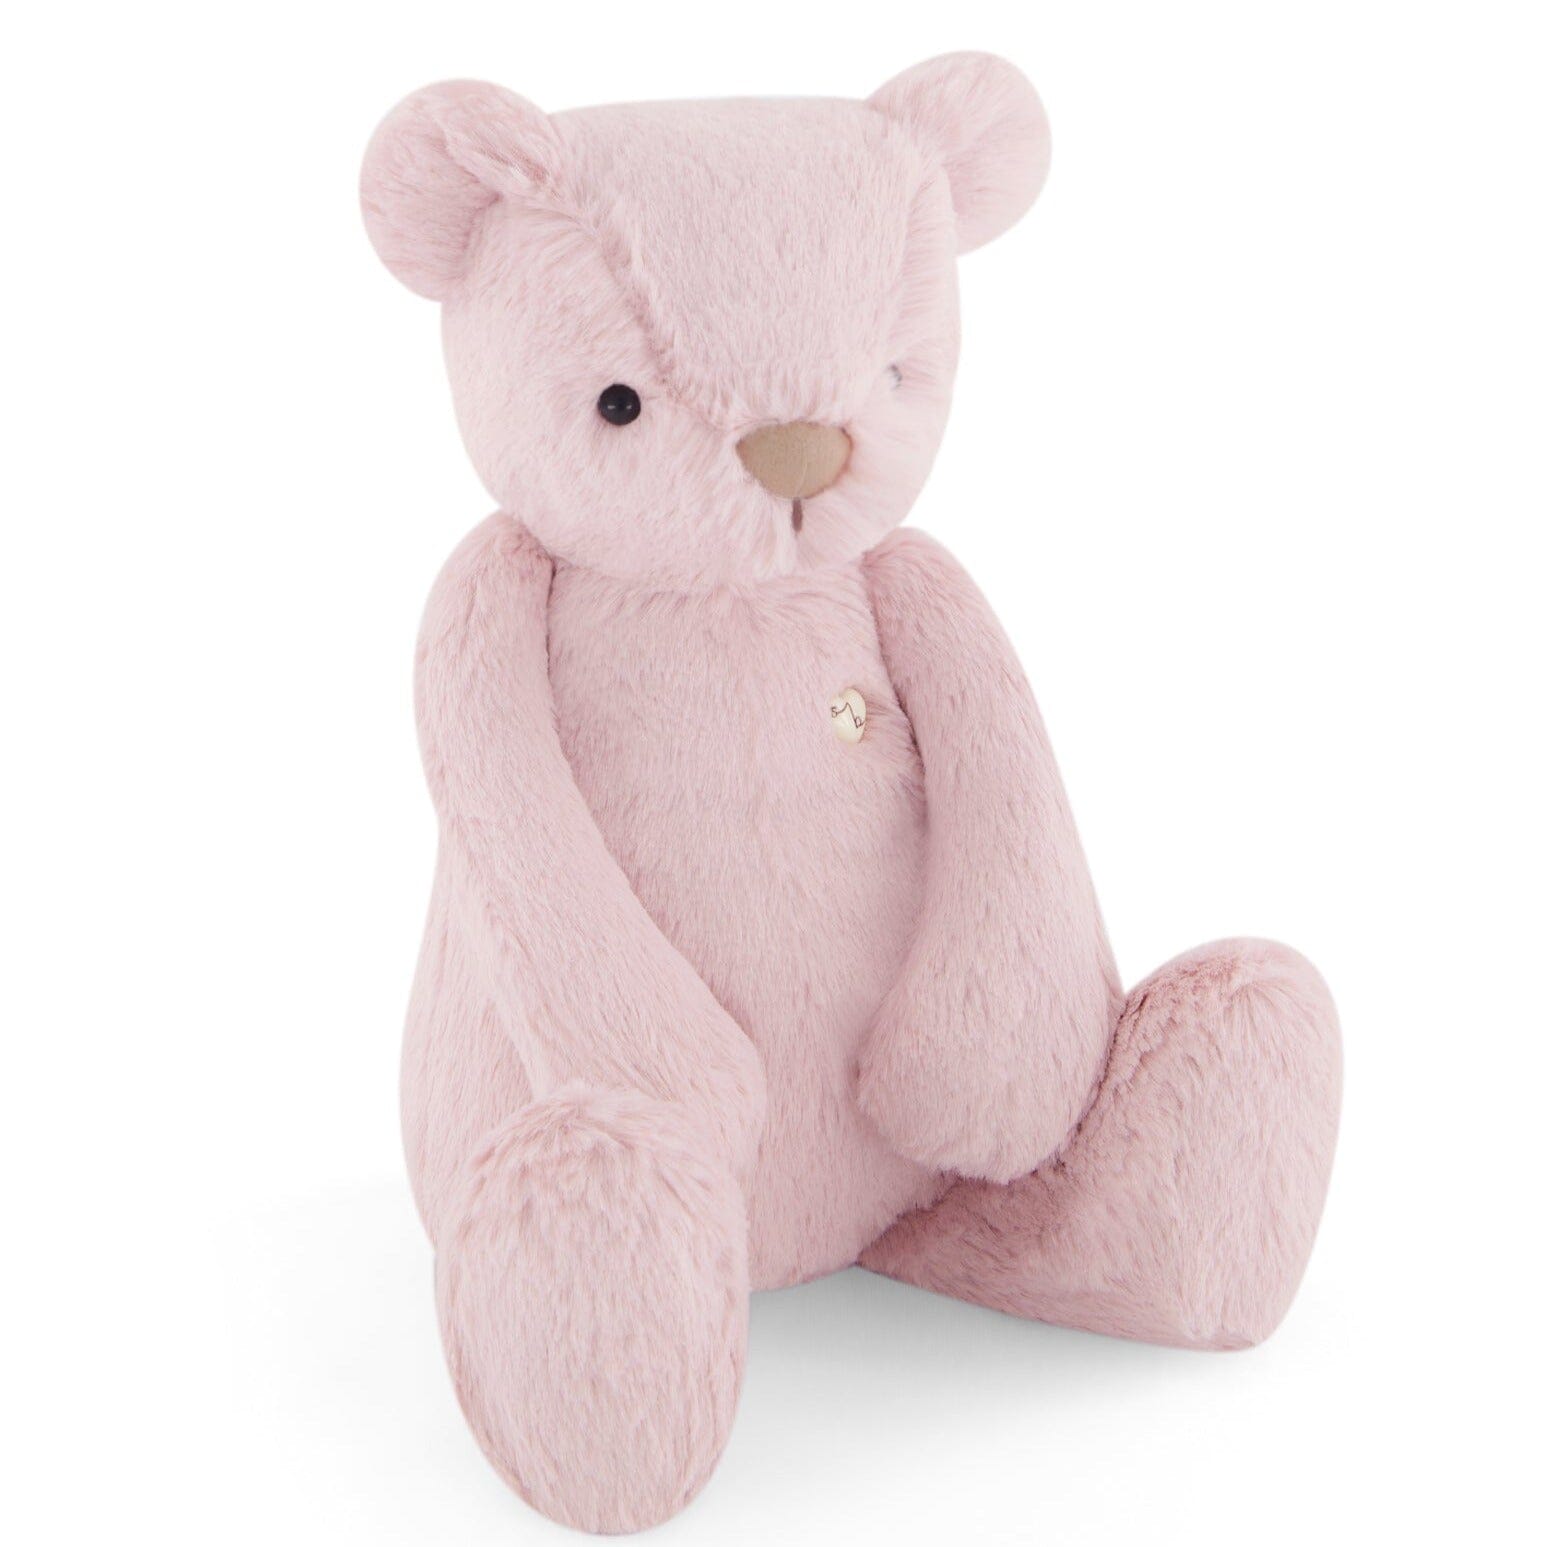 George The Bear - Snuggle Bunnies - Powder Pink